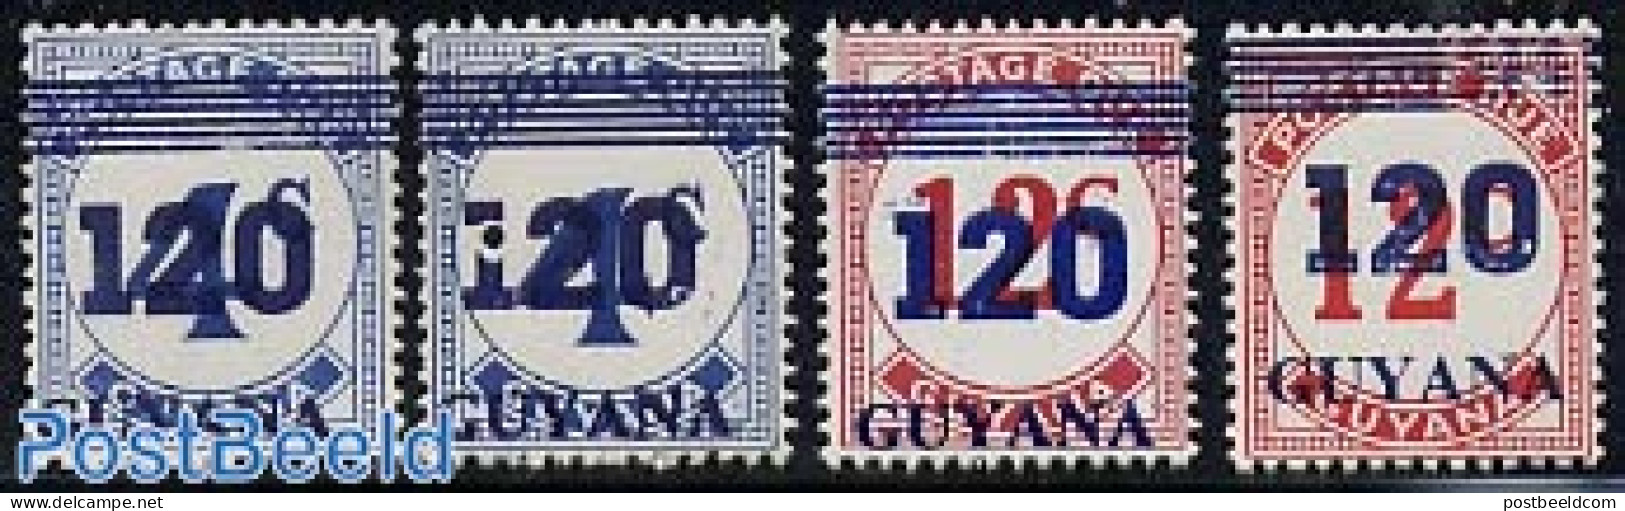 Guyana 1984 Overprints 4v (on Postage Due), Mint NH - Guyana (1966-...)